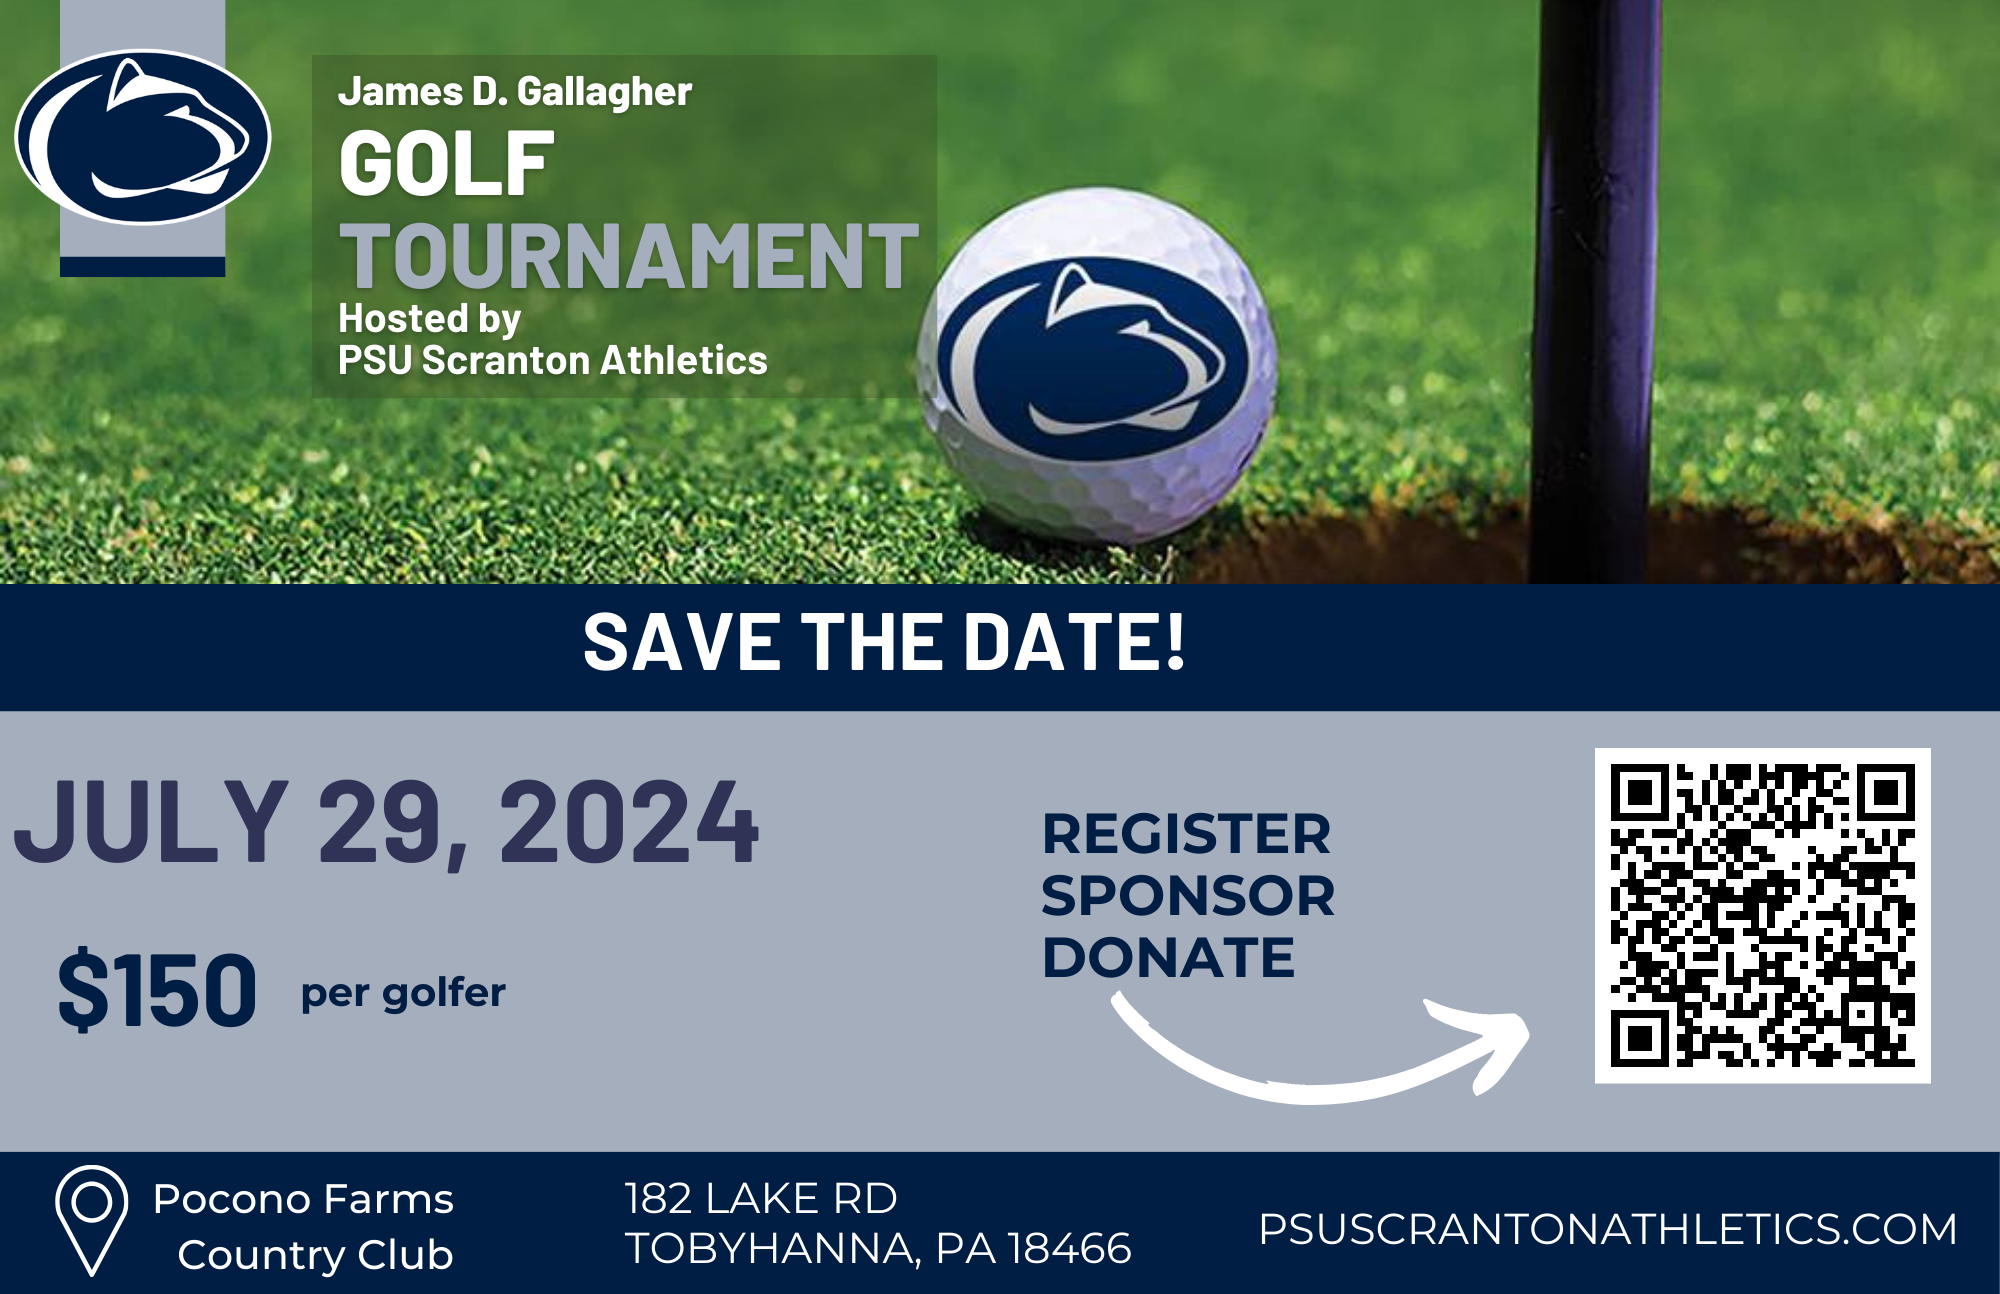 James D. Gallagher Golf Tournament set for July 29